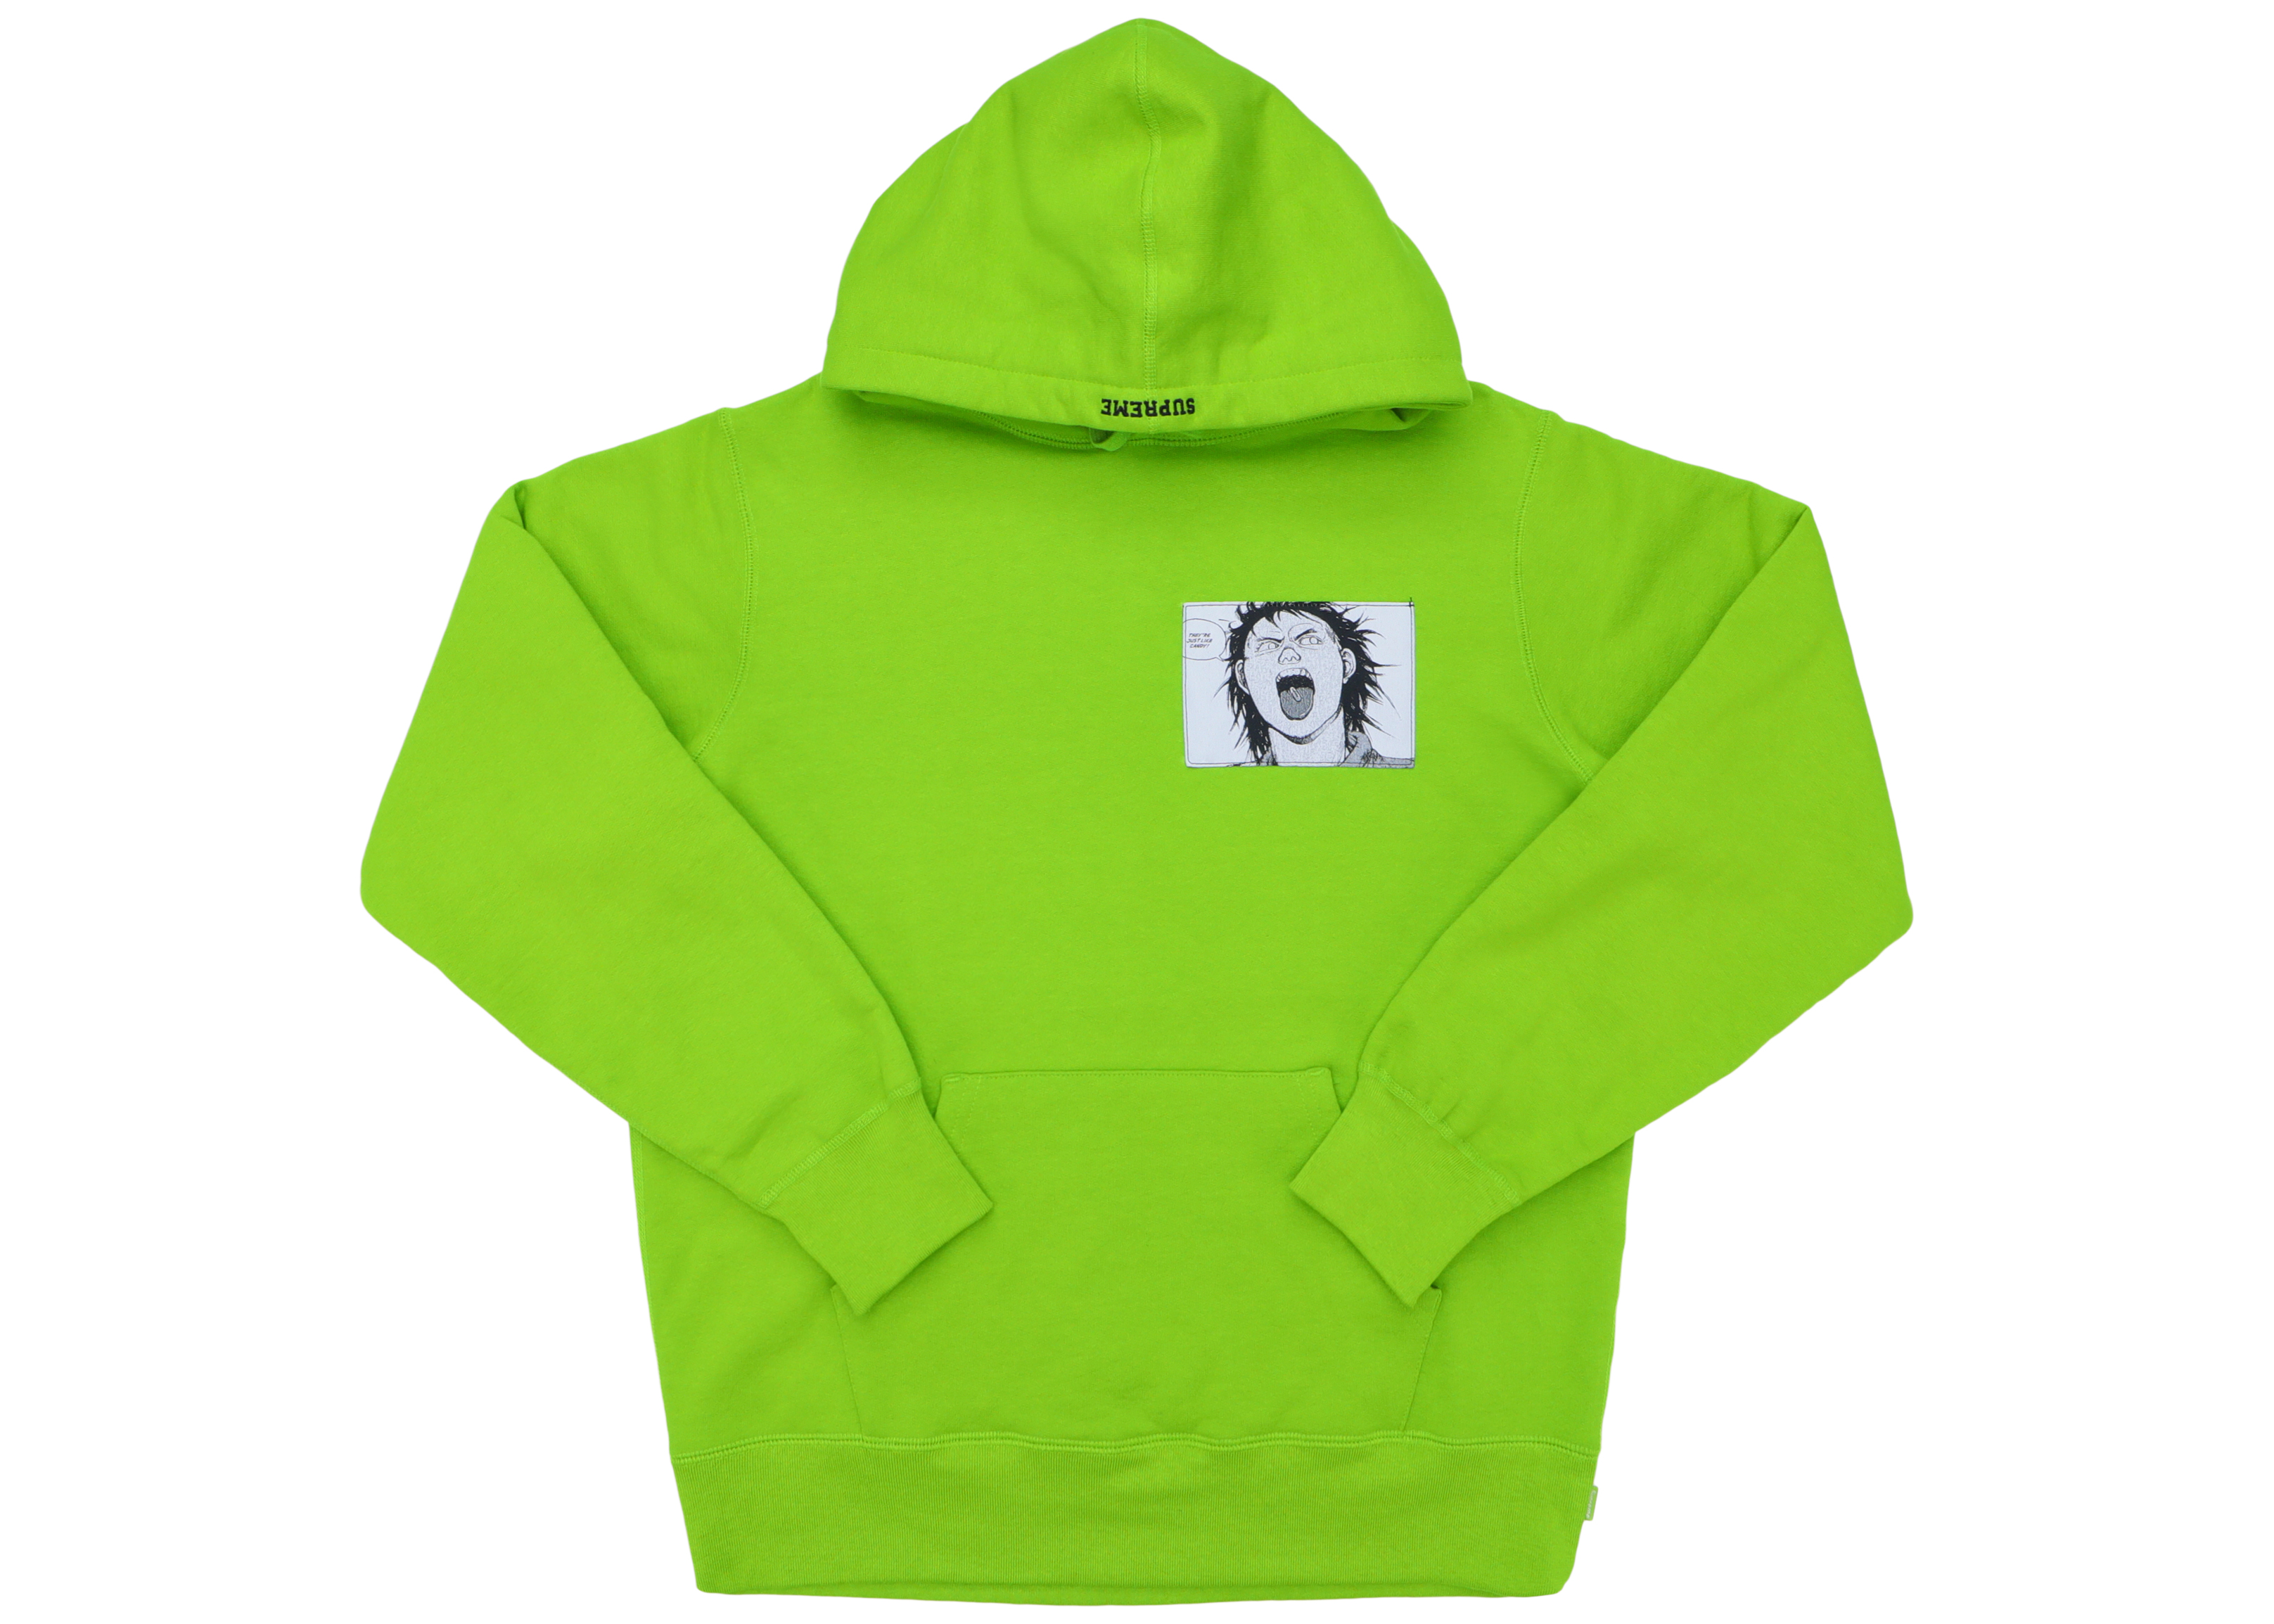 Supreme AKIRA Patches Hooded Sweatshirt Lime - FW17 - US